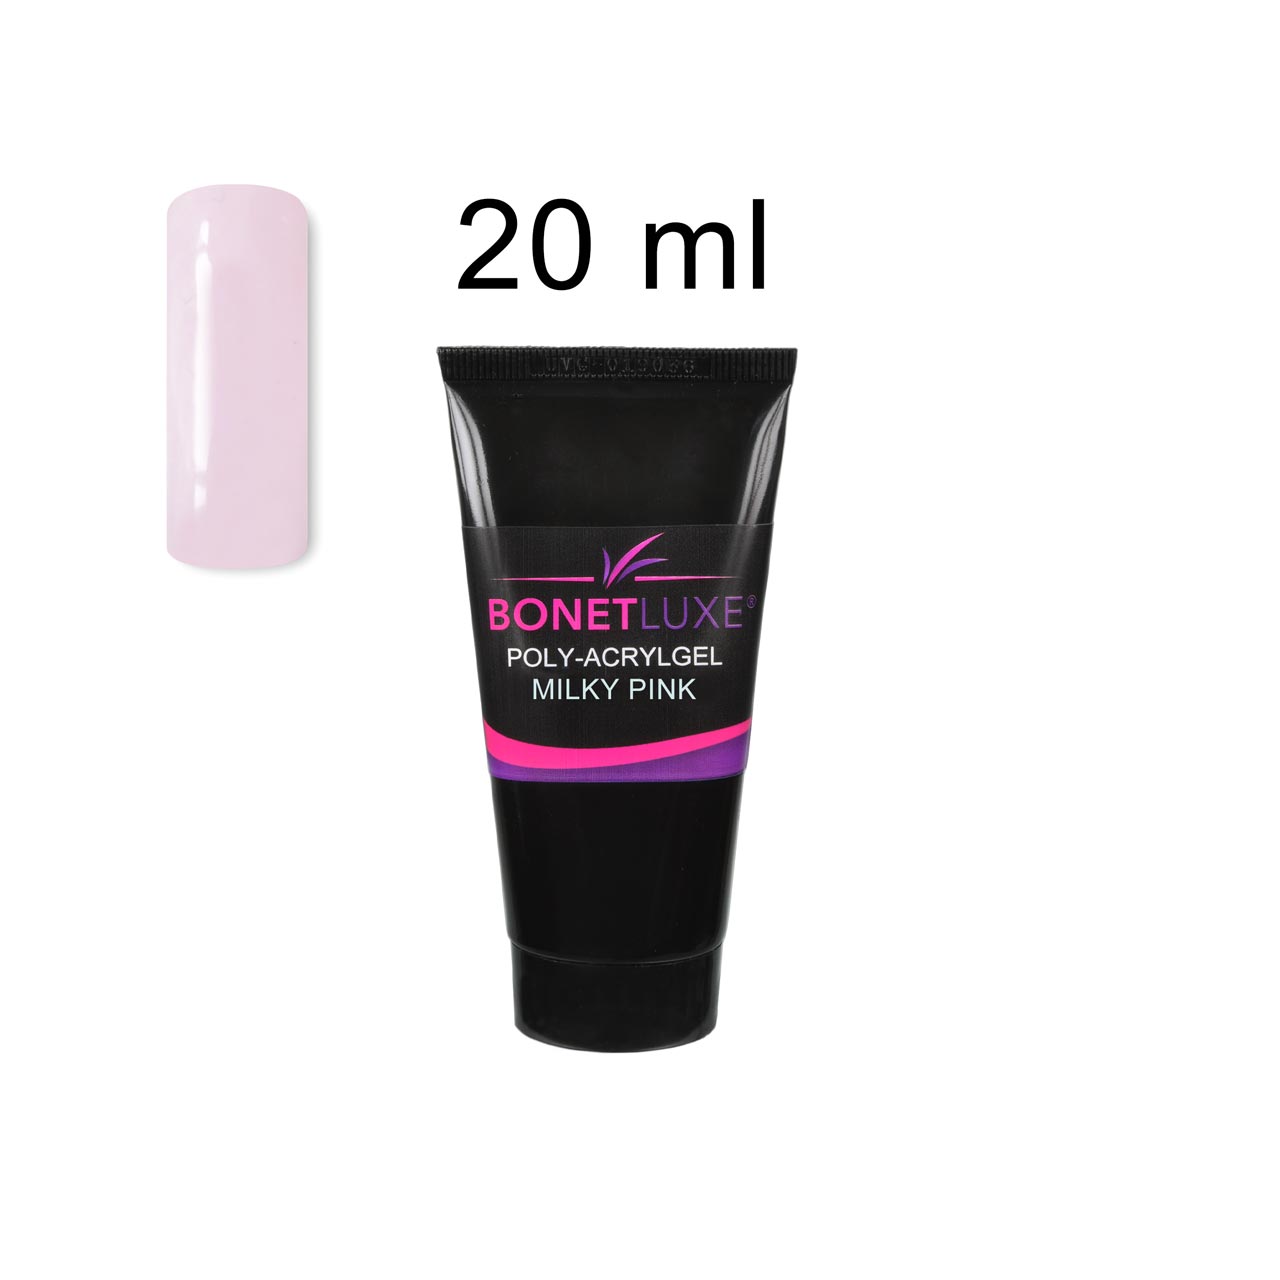 Polyacryl-Gel Milky pink 20ml